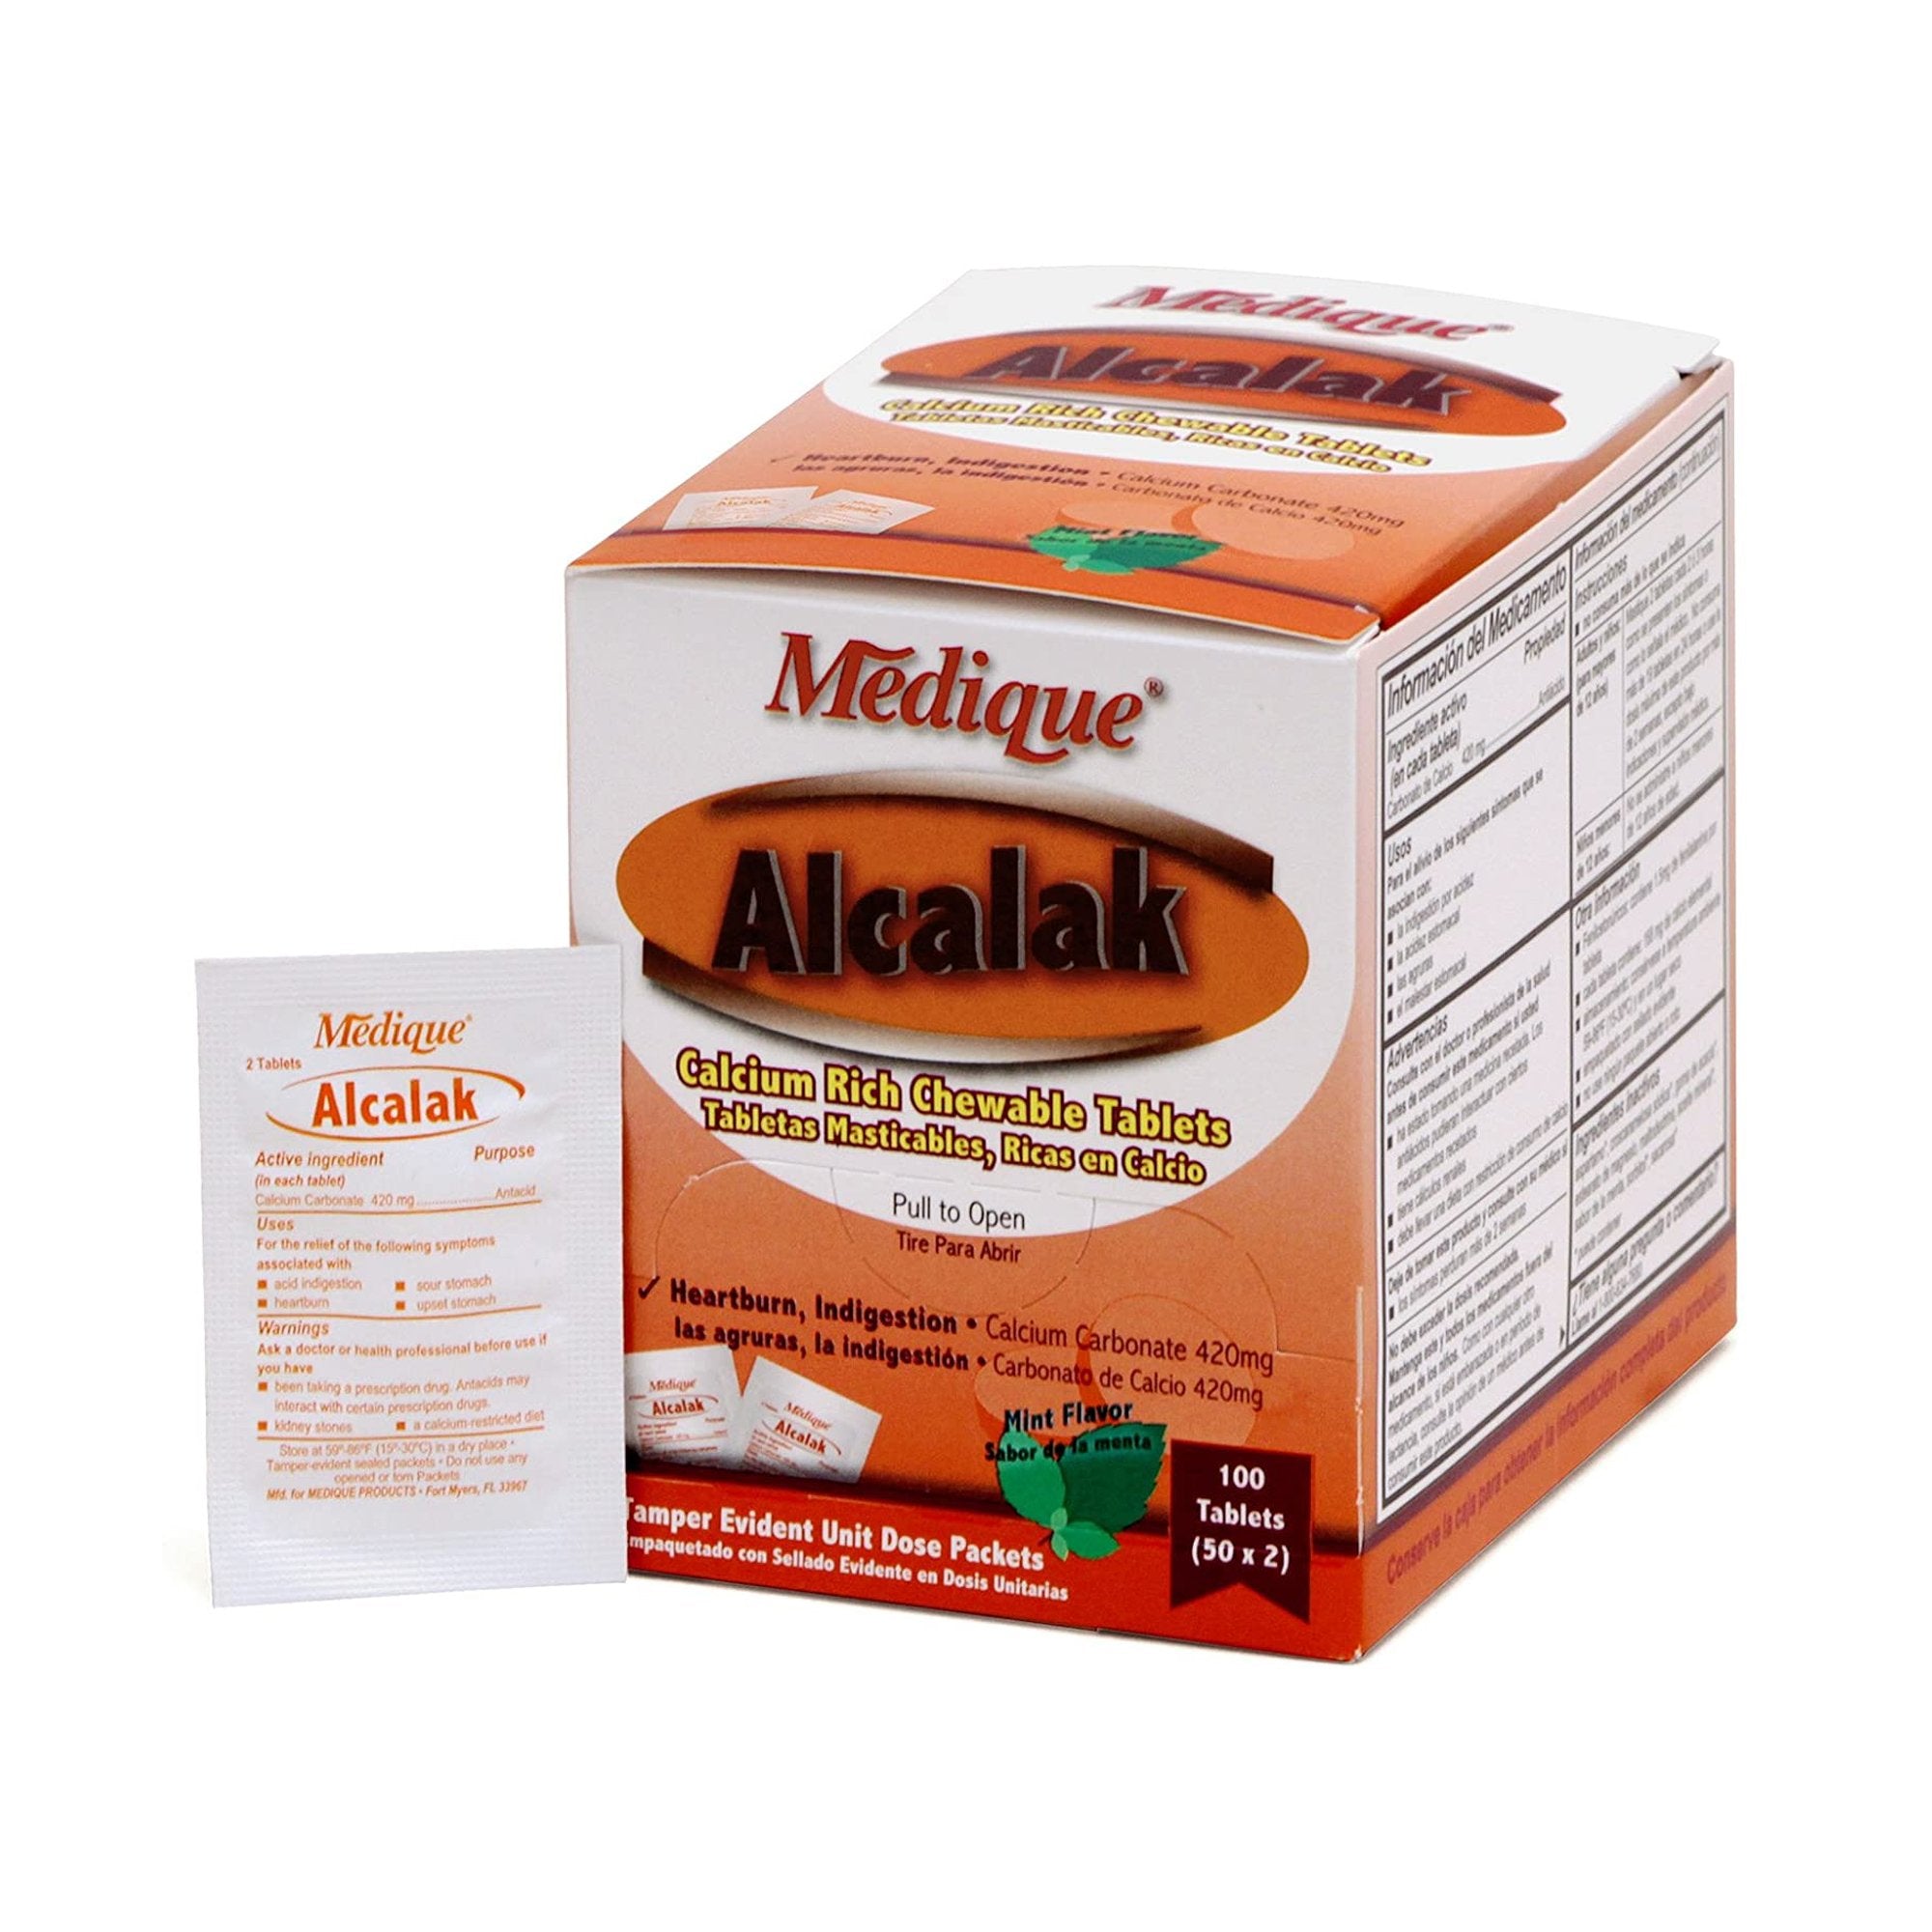 Antacid Alcalak 420 mg Strength Chewable Tablet 500 per Box